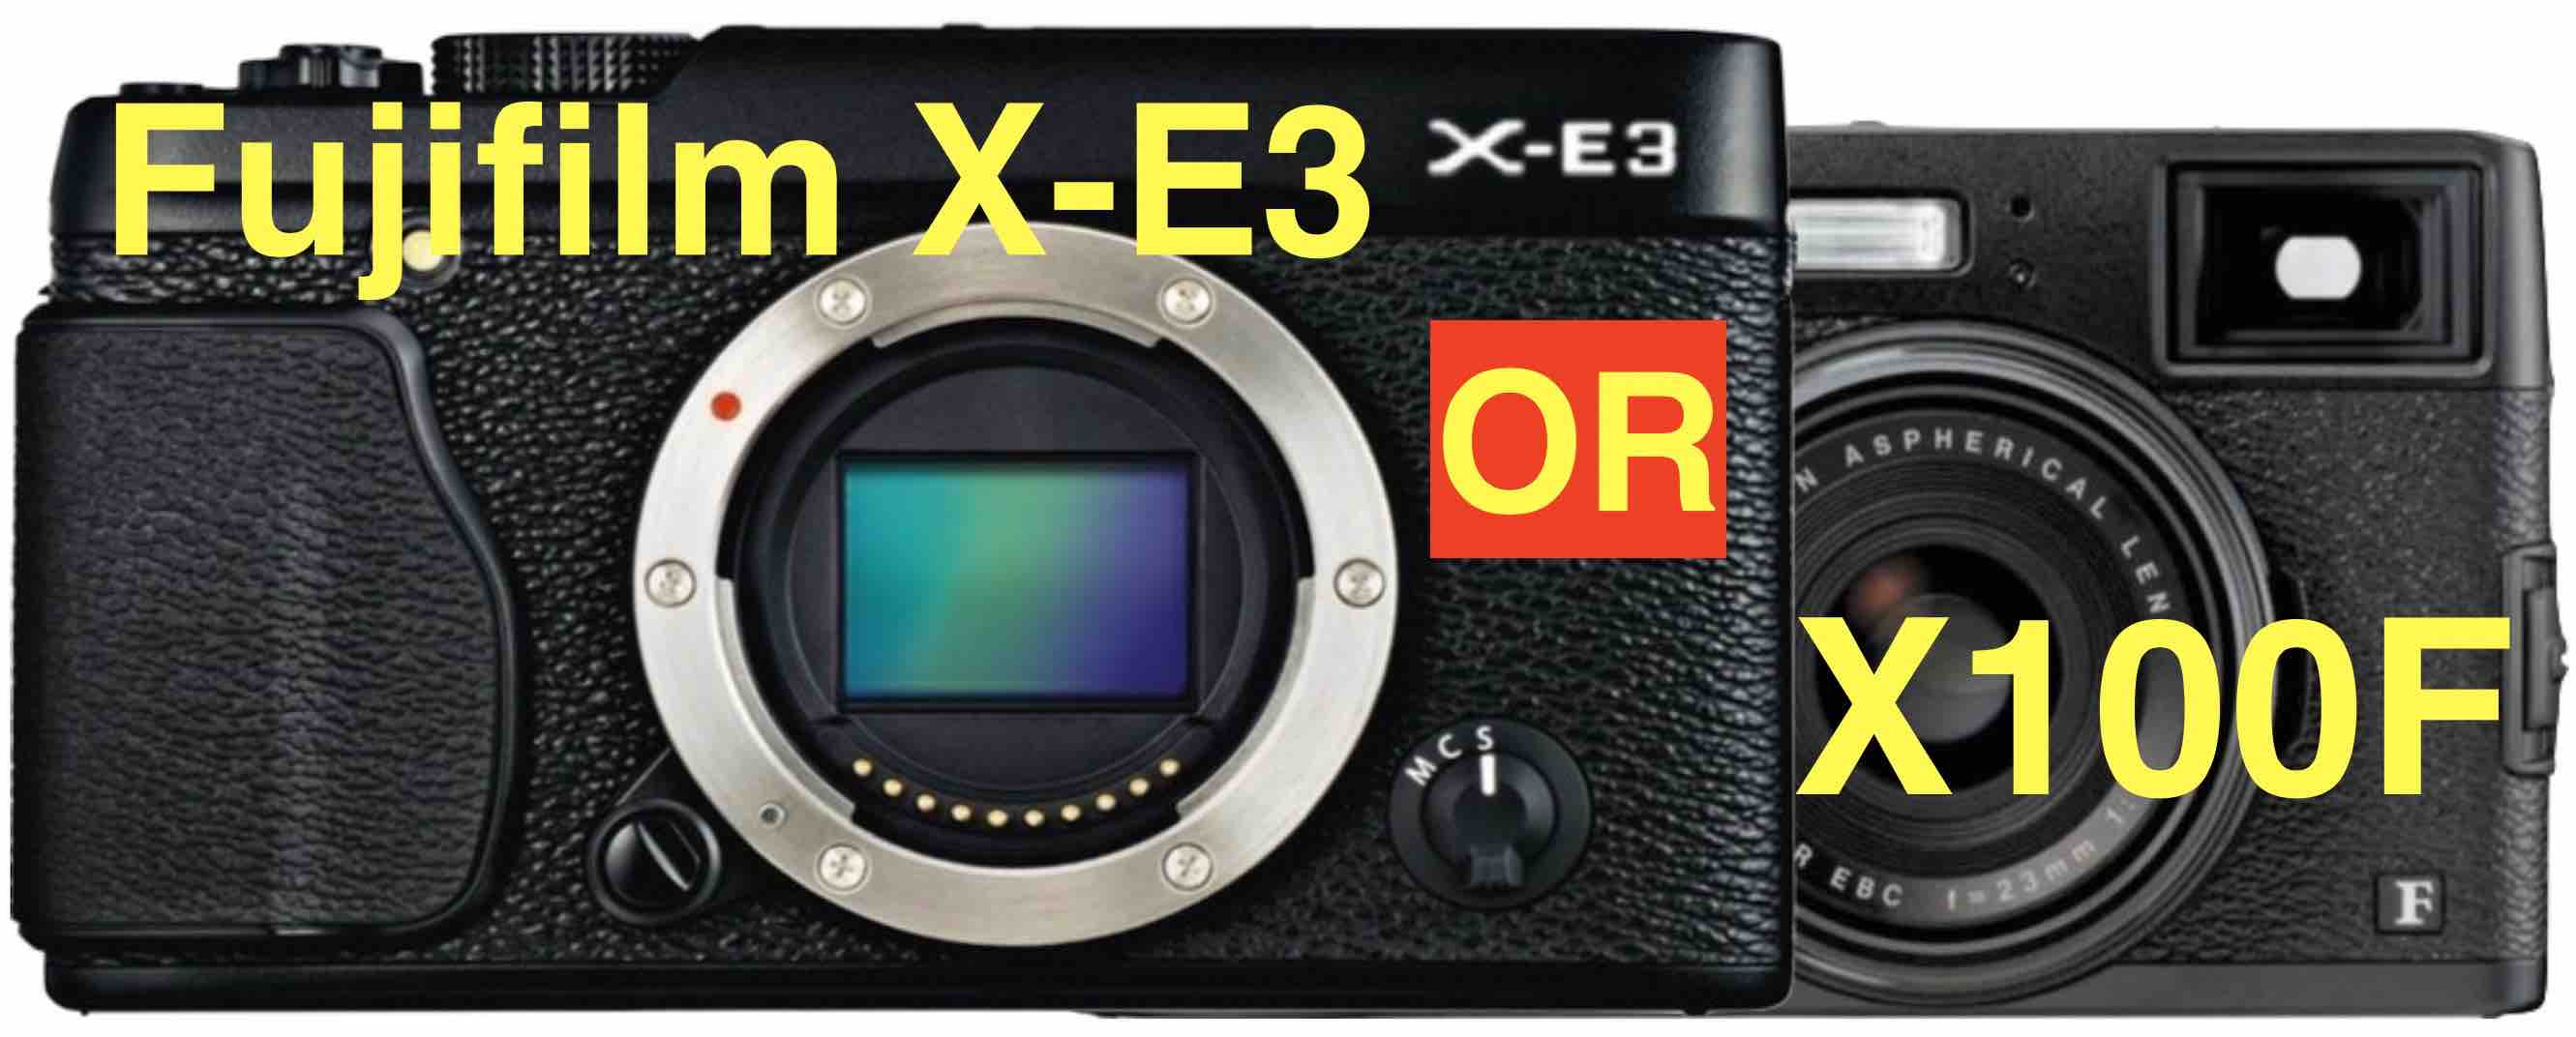 Fujifilm X100F or Fujifilm X-E3 Which One Would You Buy? - POLL